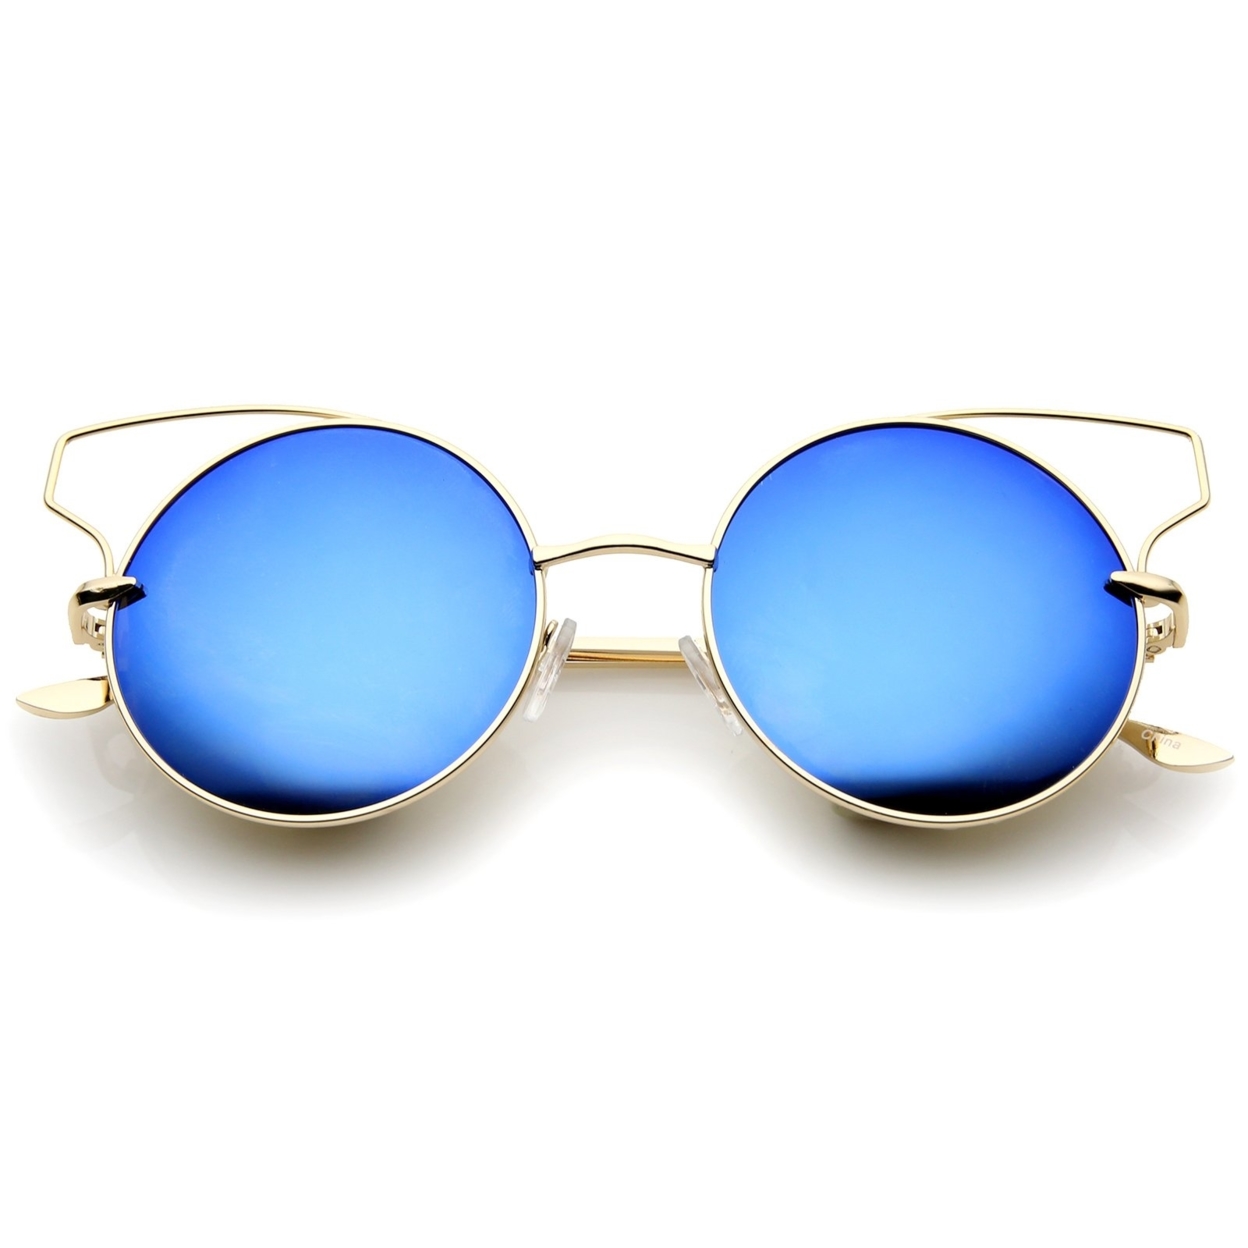 Women's Full Metal Open Design Mirrored Lens Round Cat Eye Sunglasses 55mm - Gold / Blue Mirror